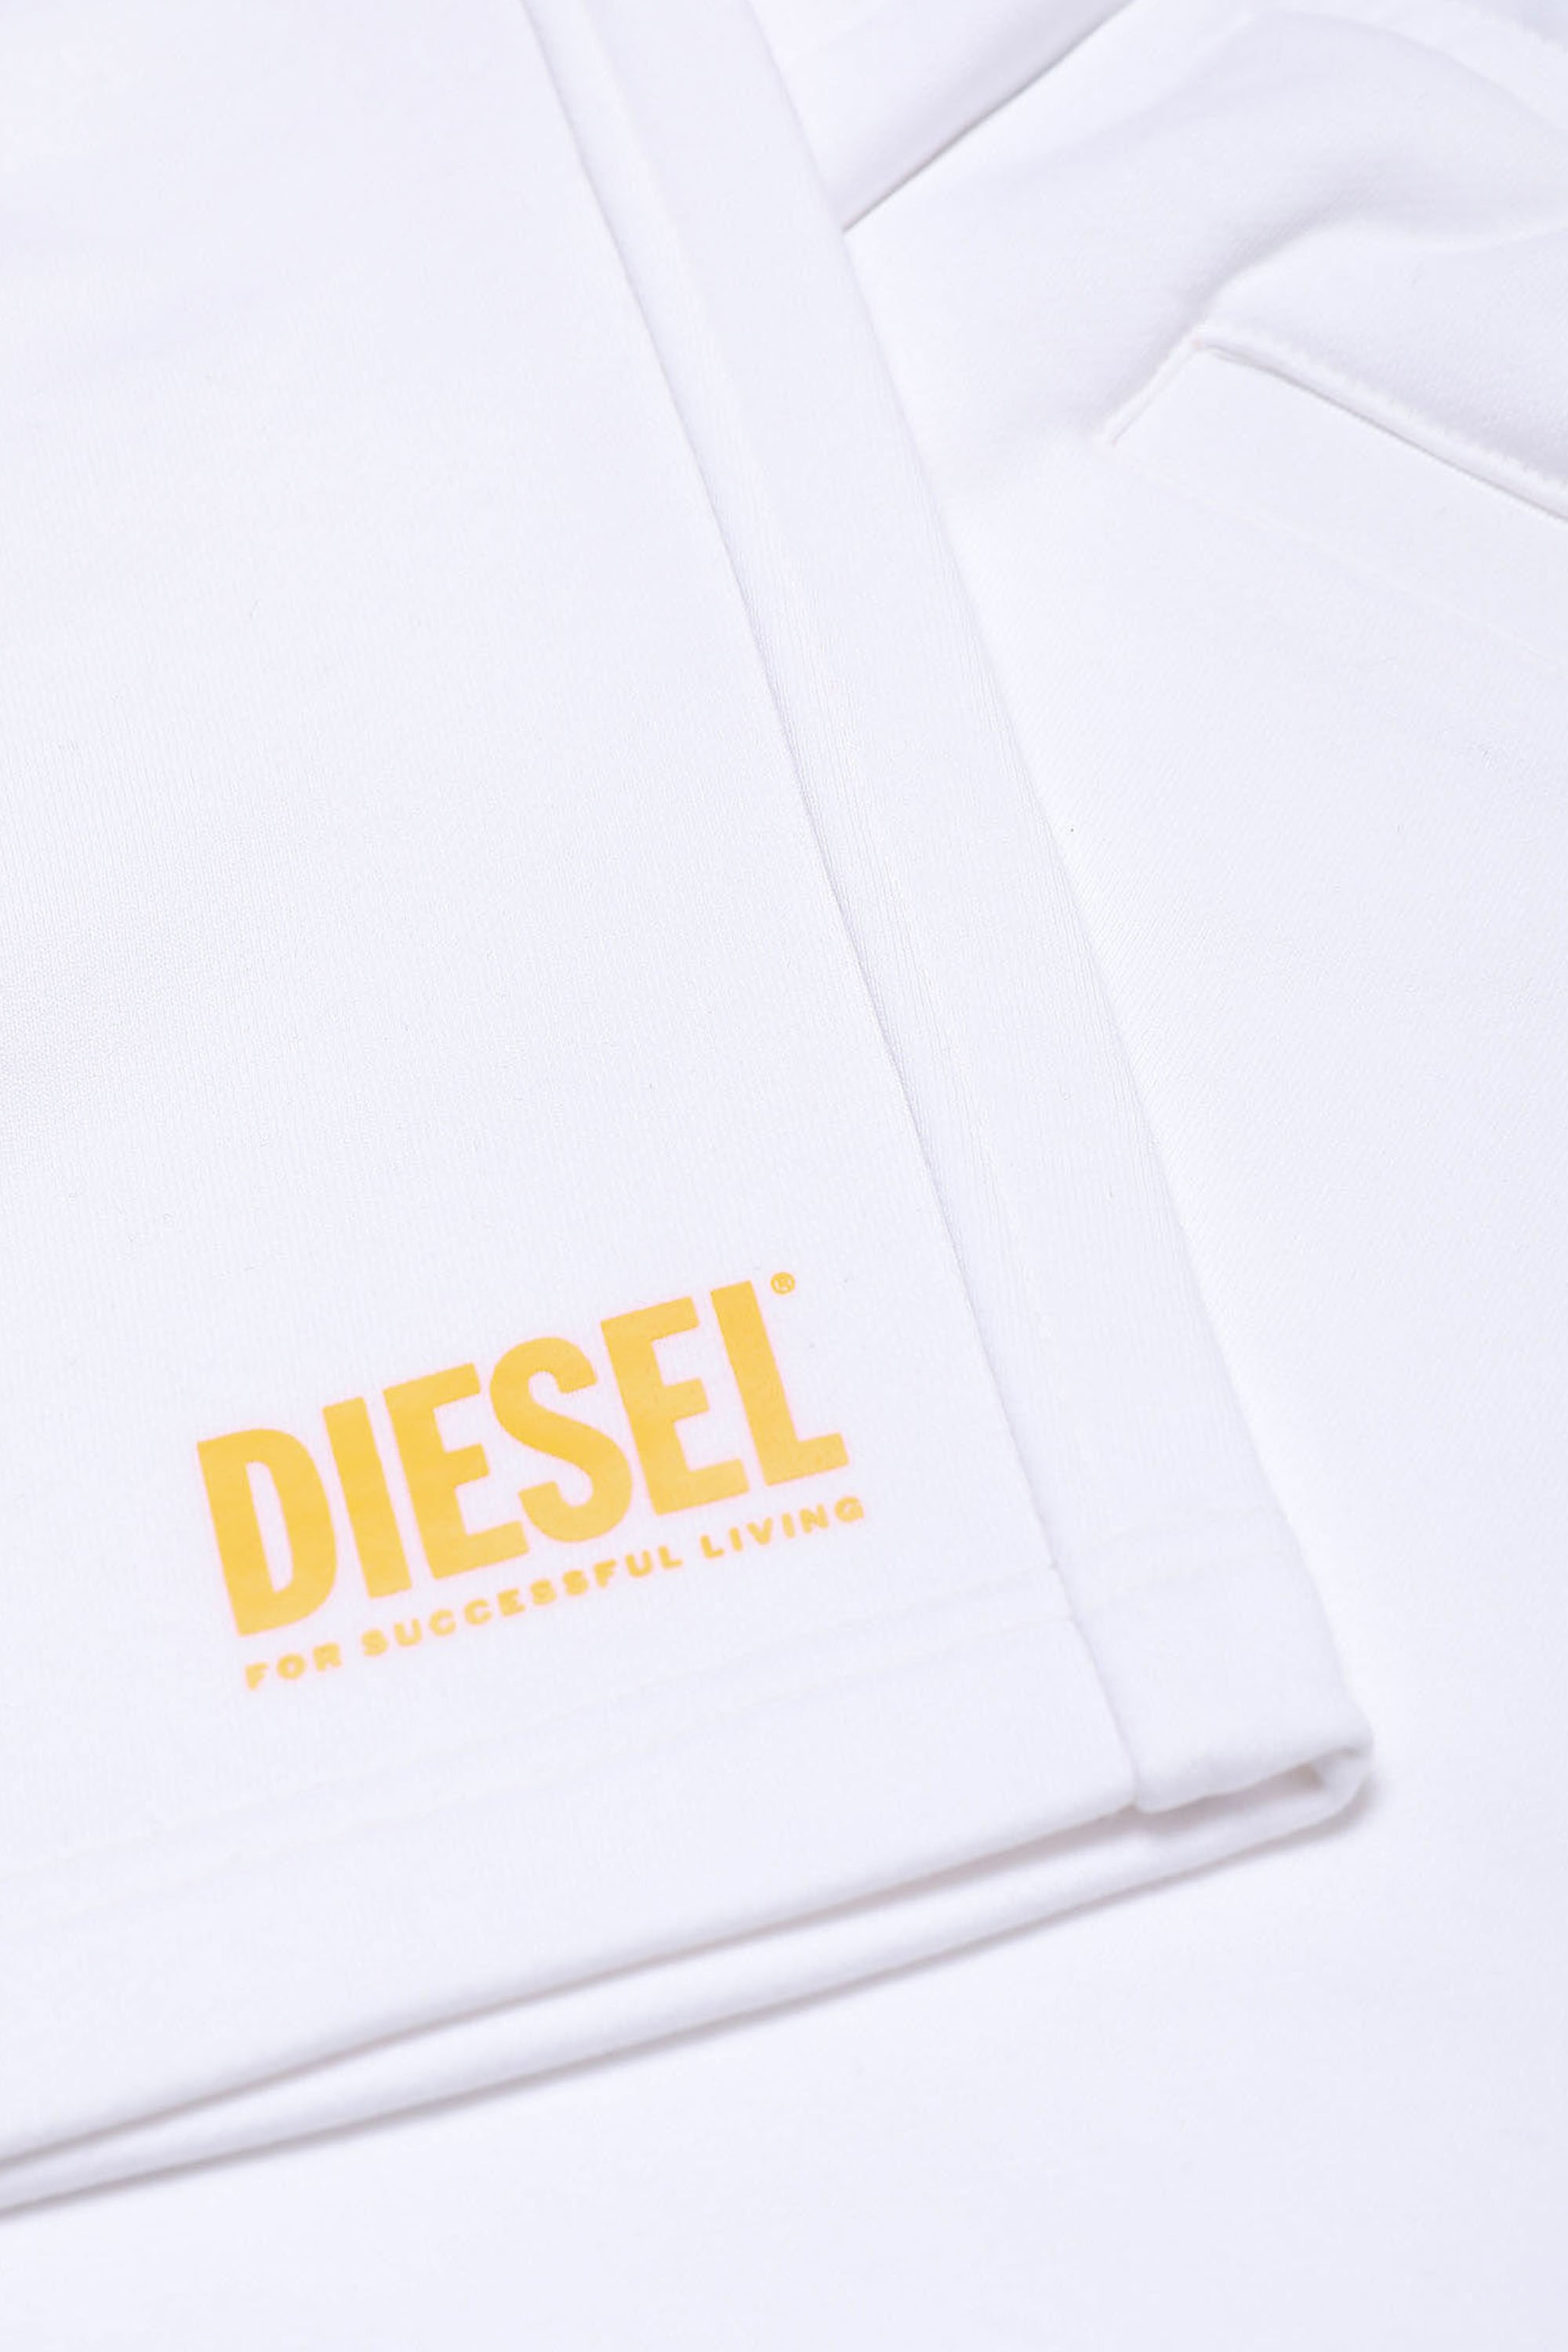 Diesel - PCROWN, White - Image 3